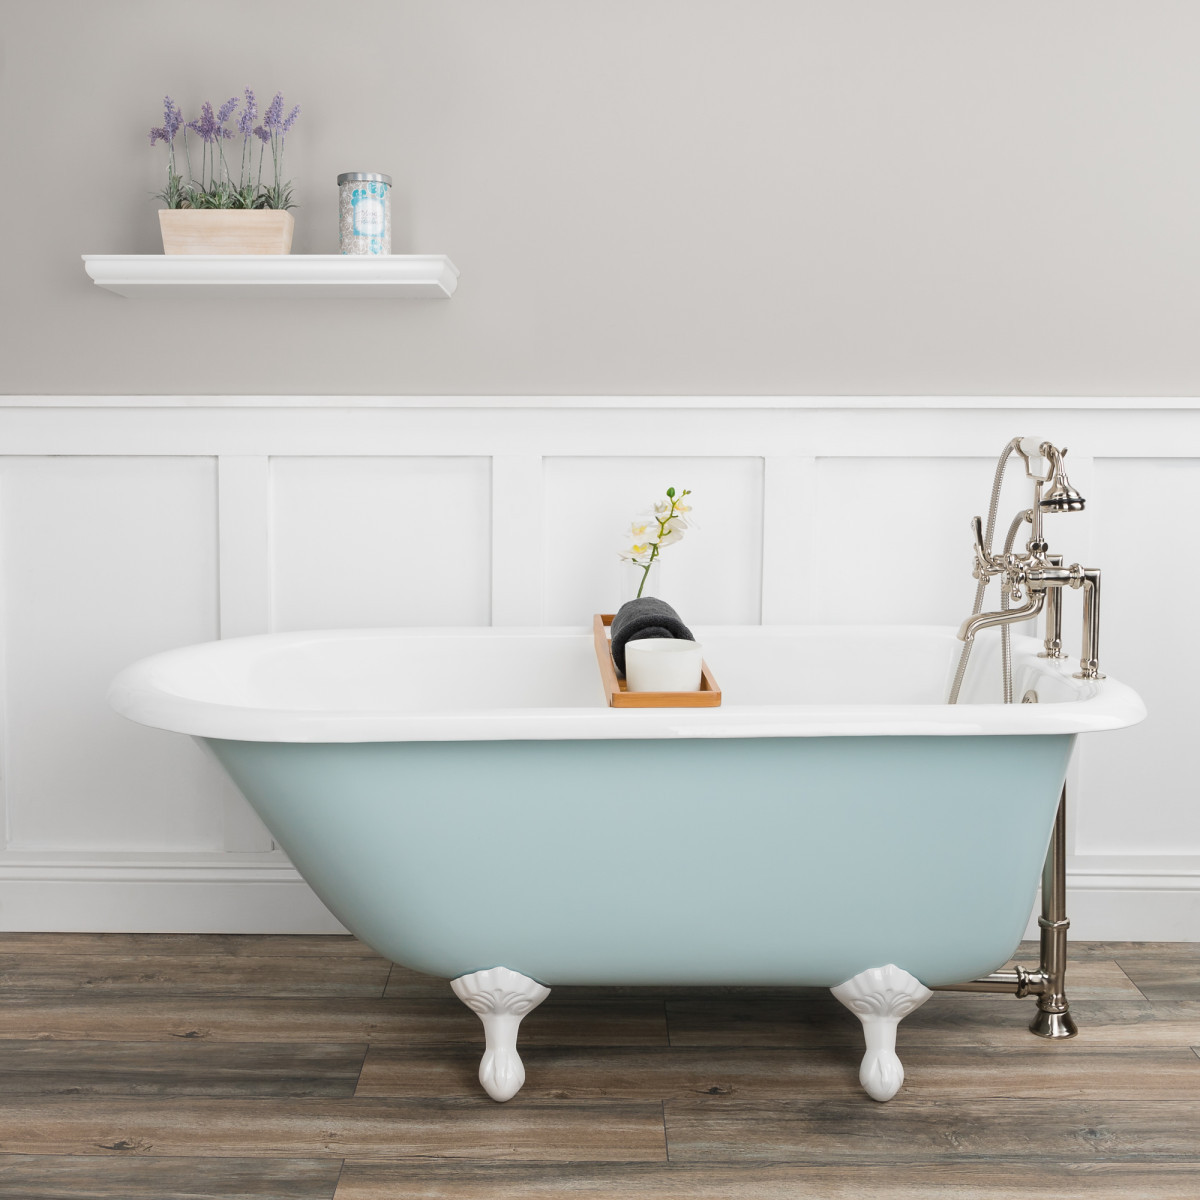 Clawfoot Tub In Small Bathroom
 Design and Inspirations Clawfoot Bathtubs for Small Bathrooms